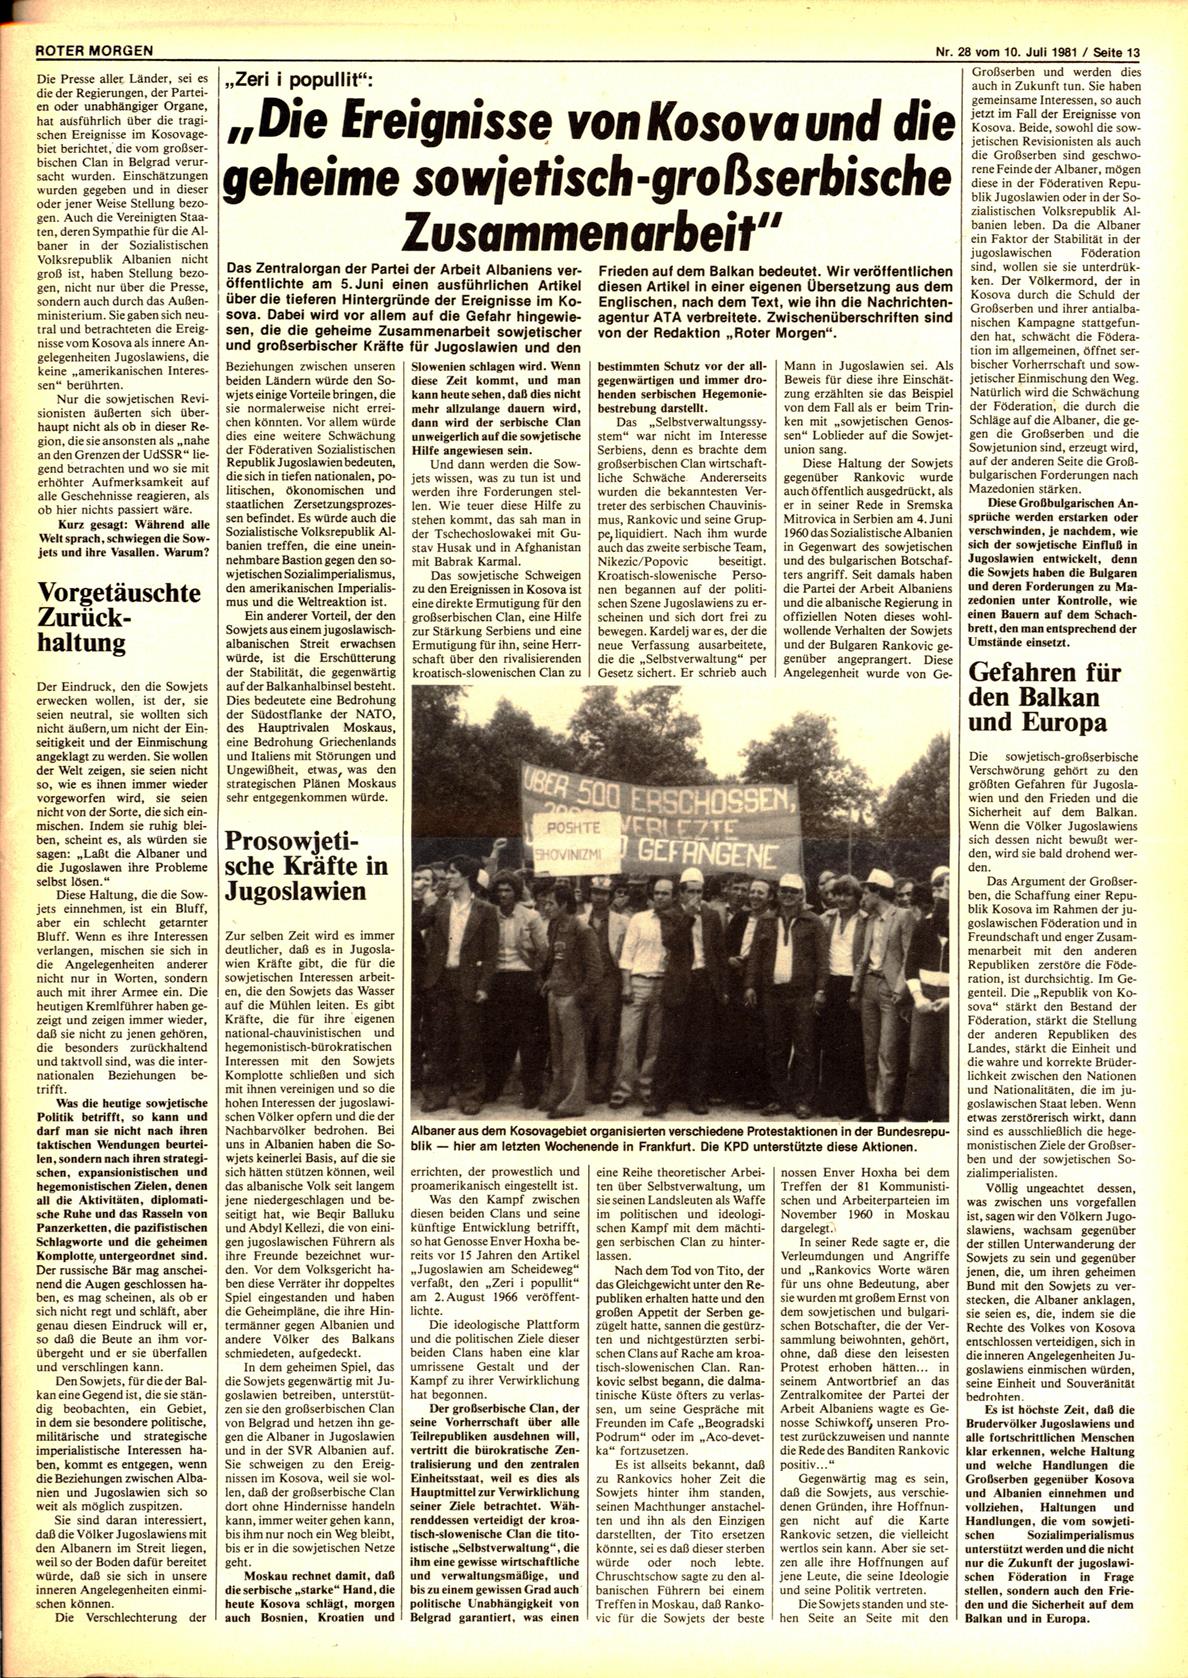 Roter Morgen, 15. Jg., 10. Juli 1981, Nr. 28, Seite 13